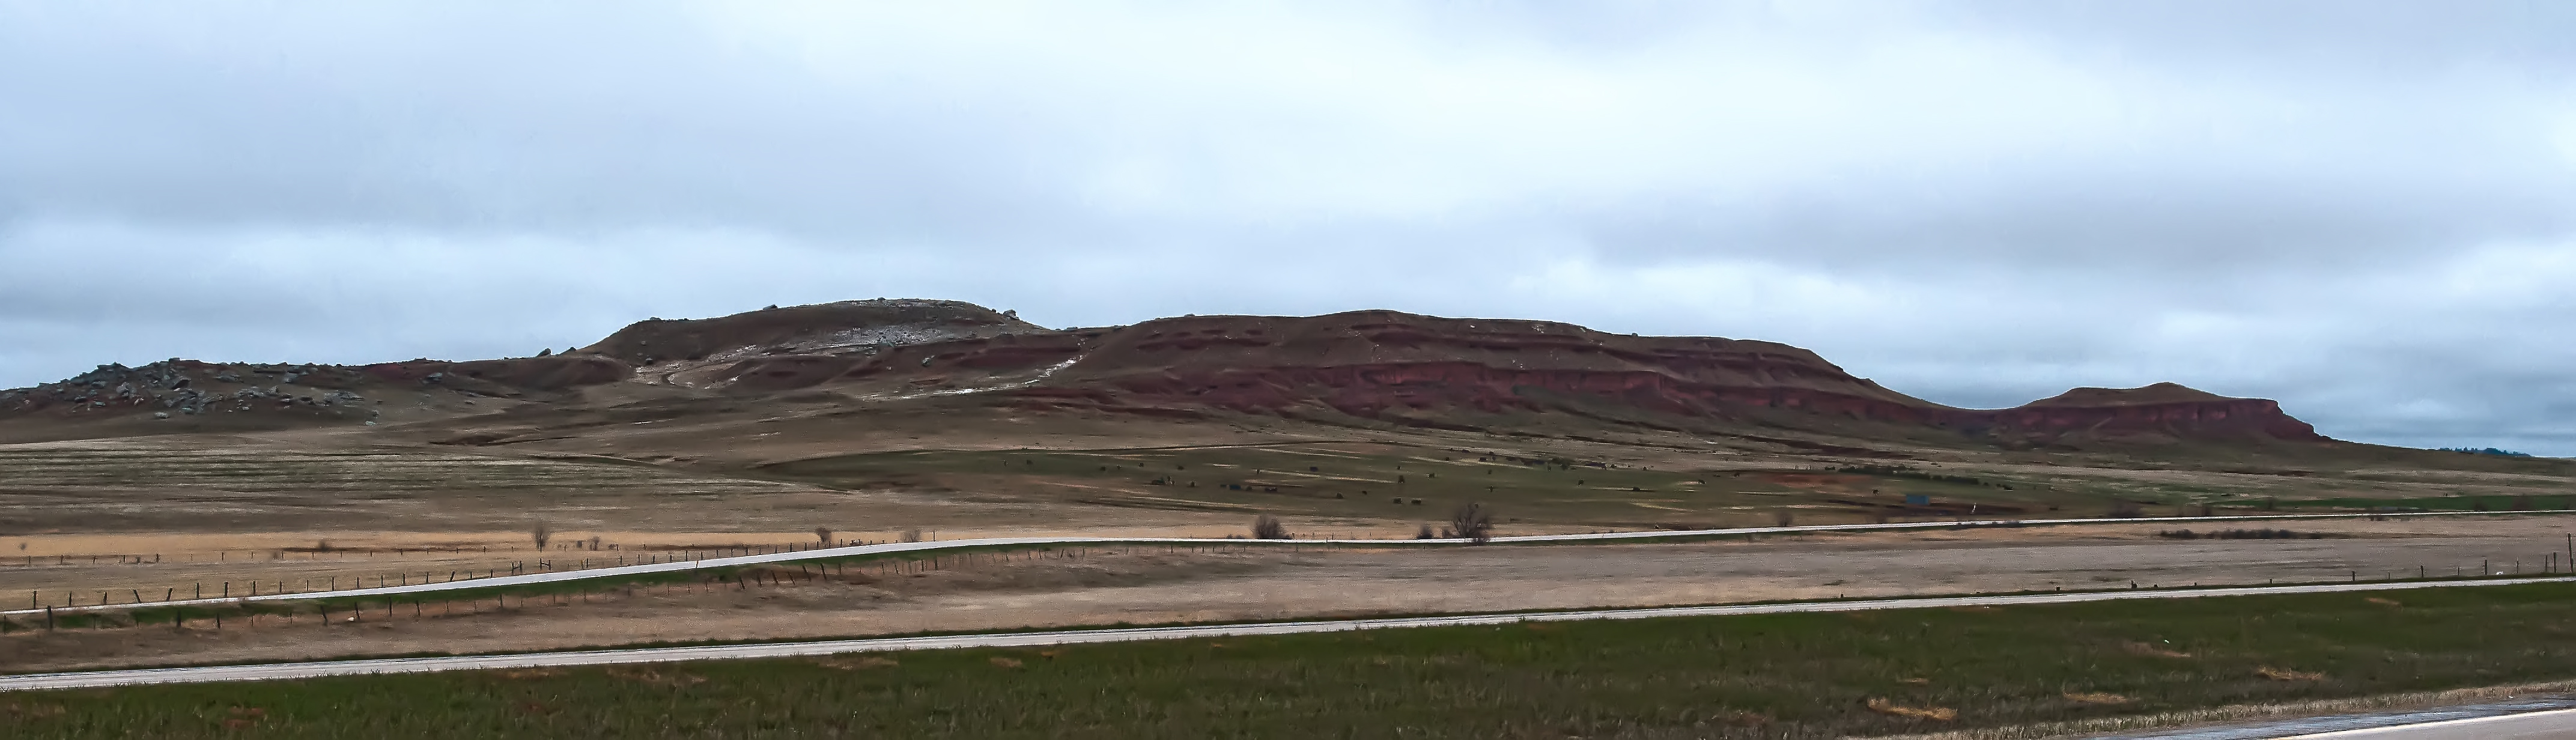 South Dakota landscape, Arid, Landscape, Valley, Usa, HQ Photo